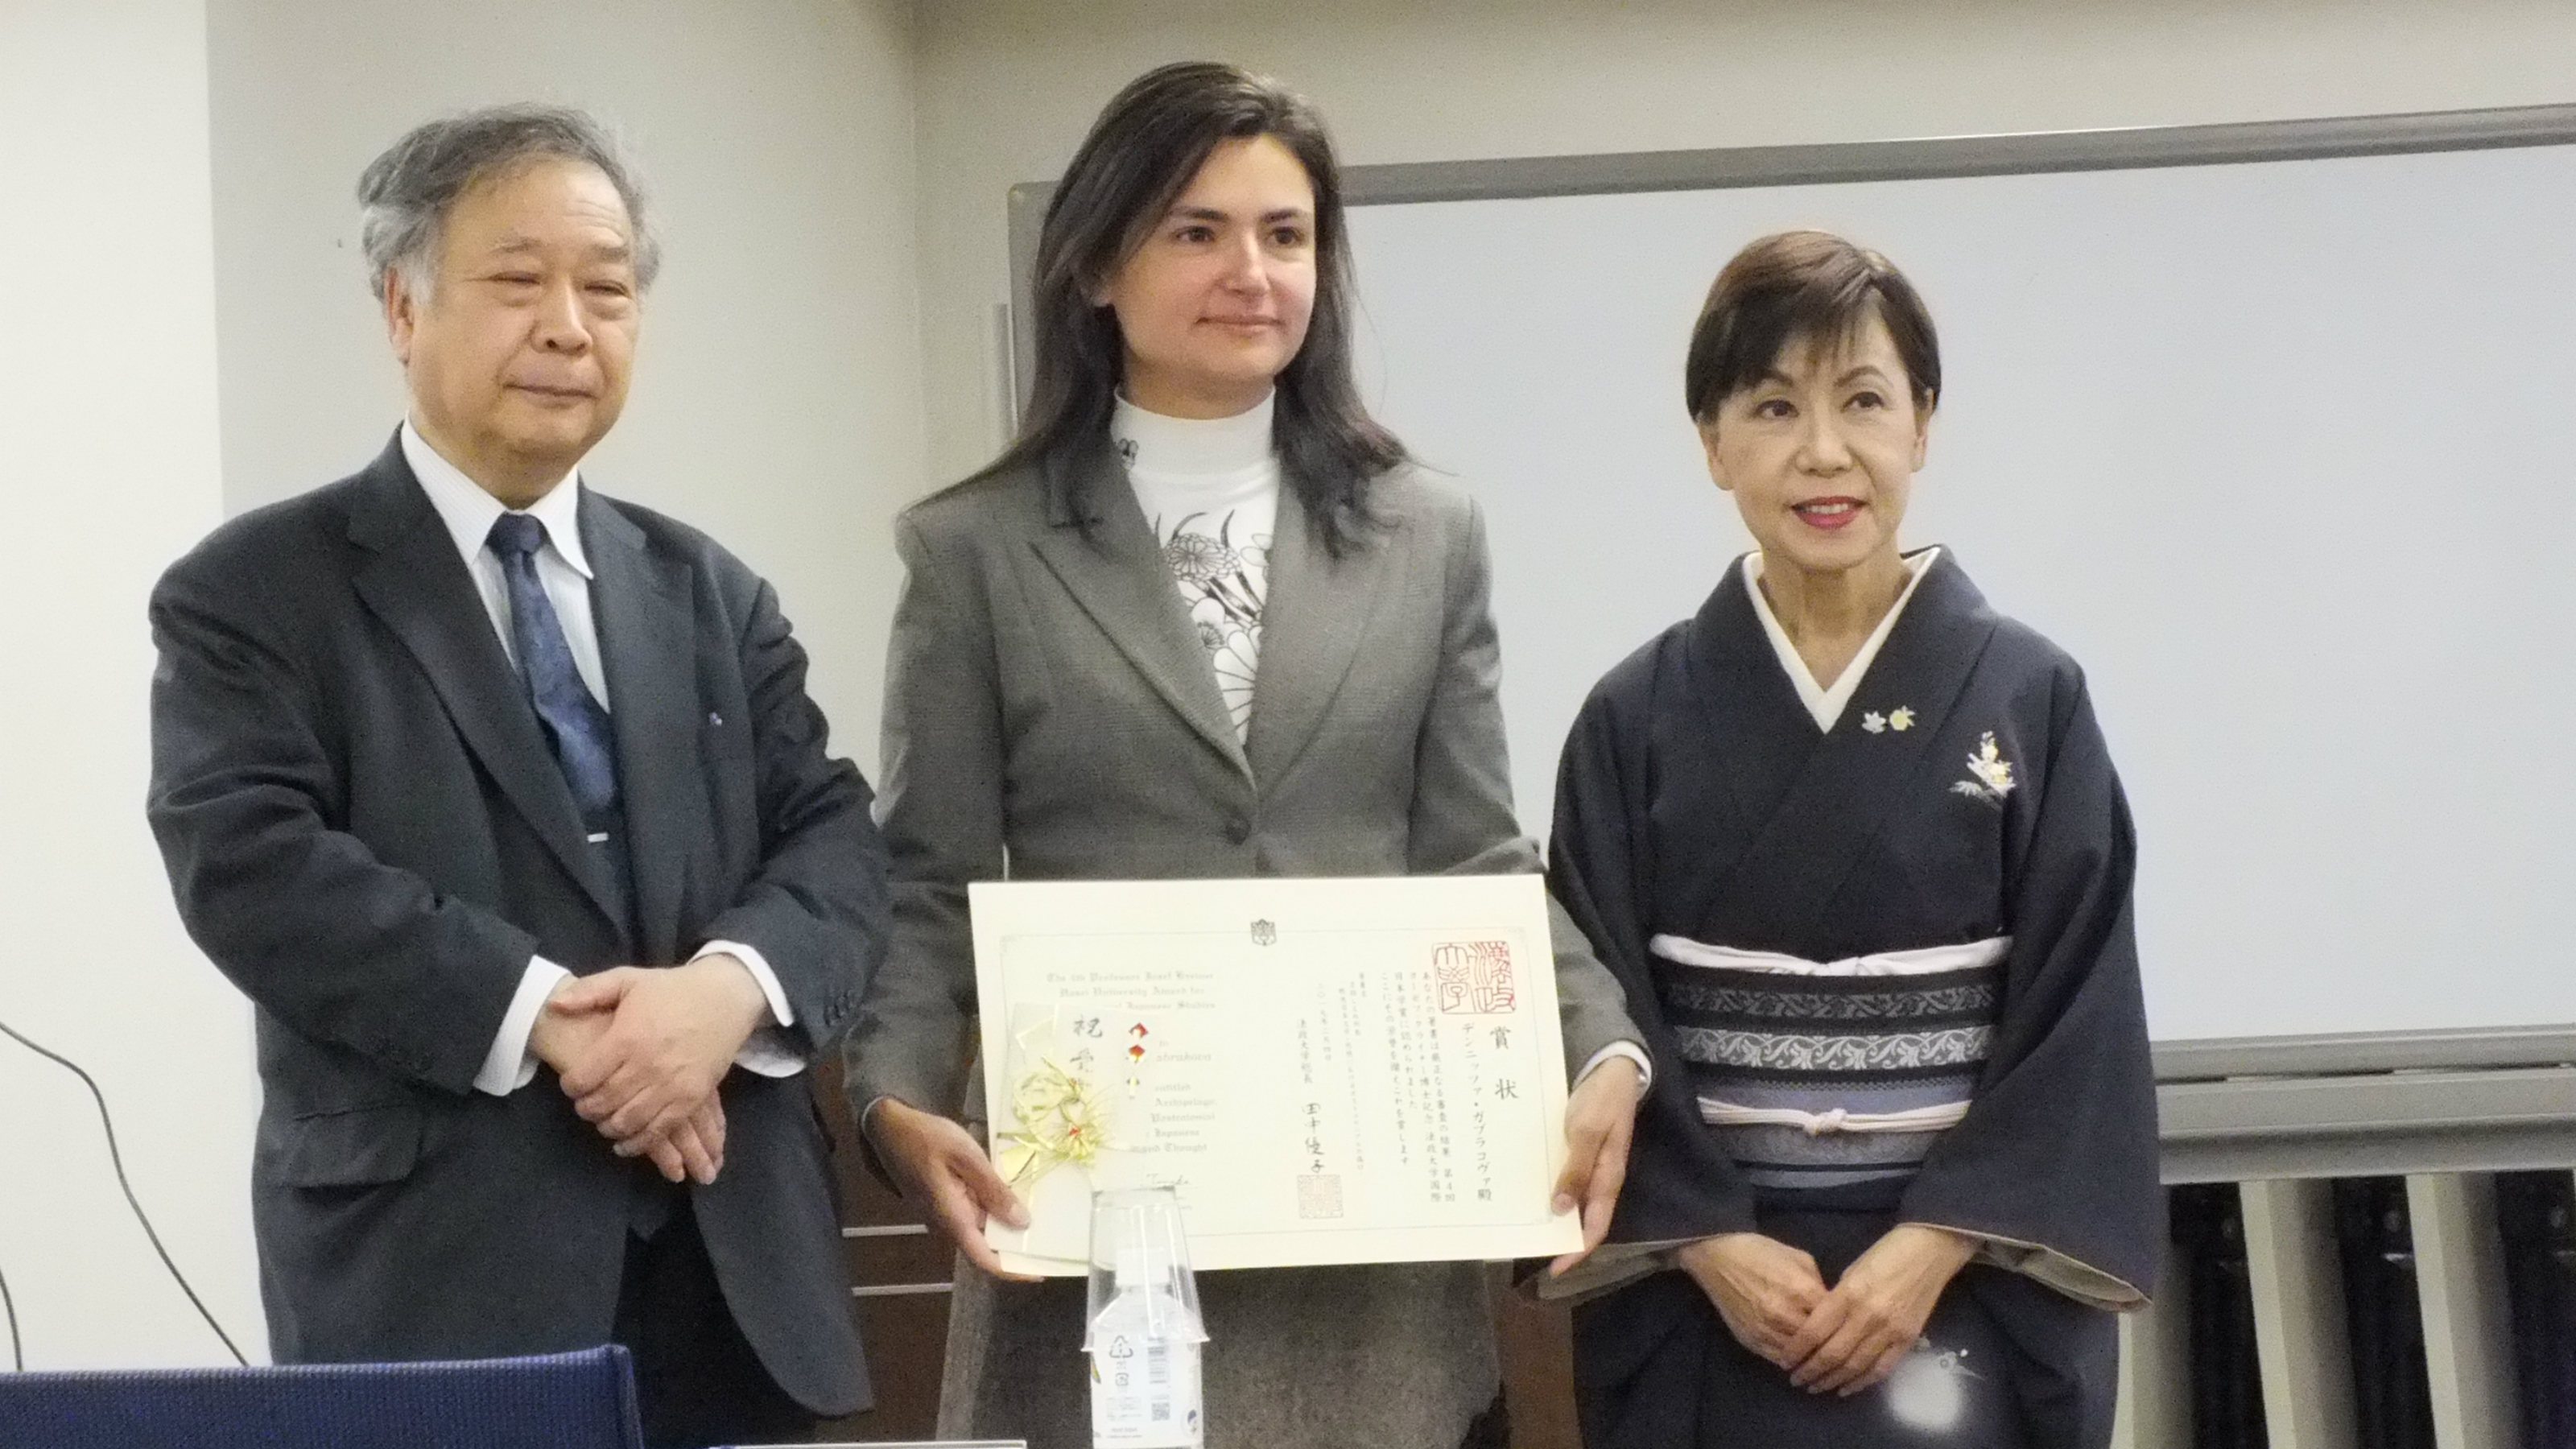 Dr Gabrakova recieves International award for contribution to Japanese studies